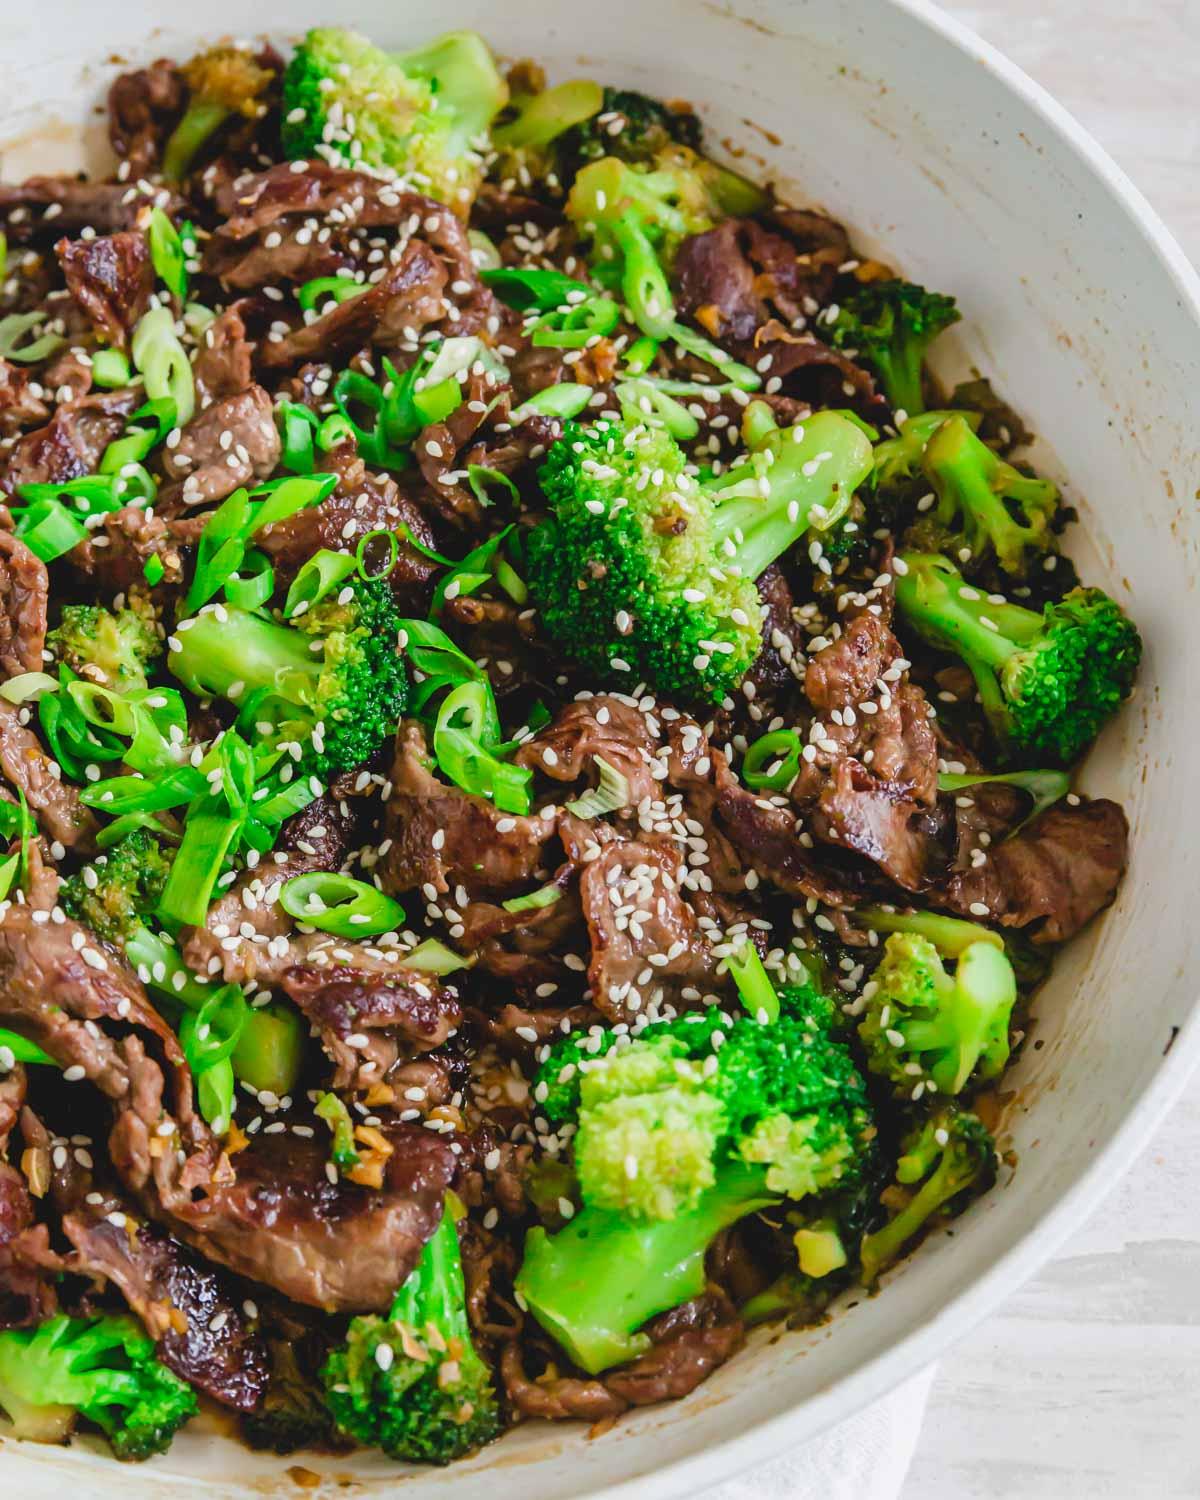 Beef shaved steak stir fry with broccoli, stir fry sauce, and sesame seeds.